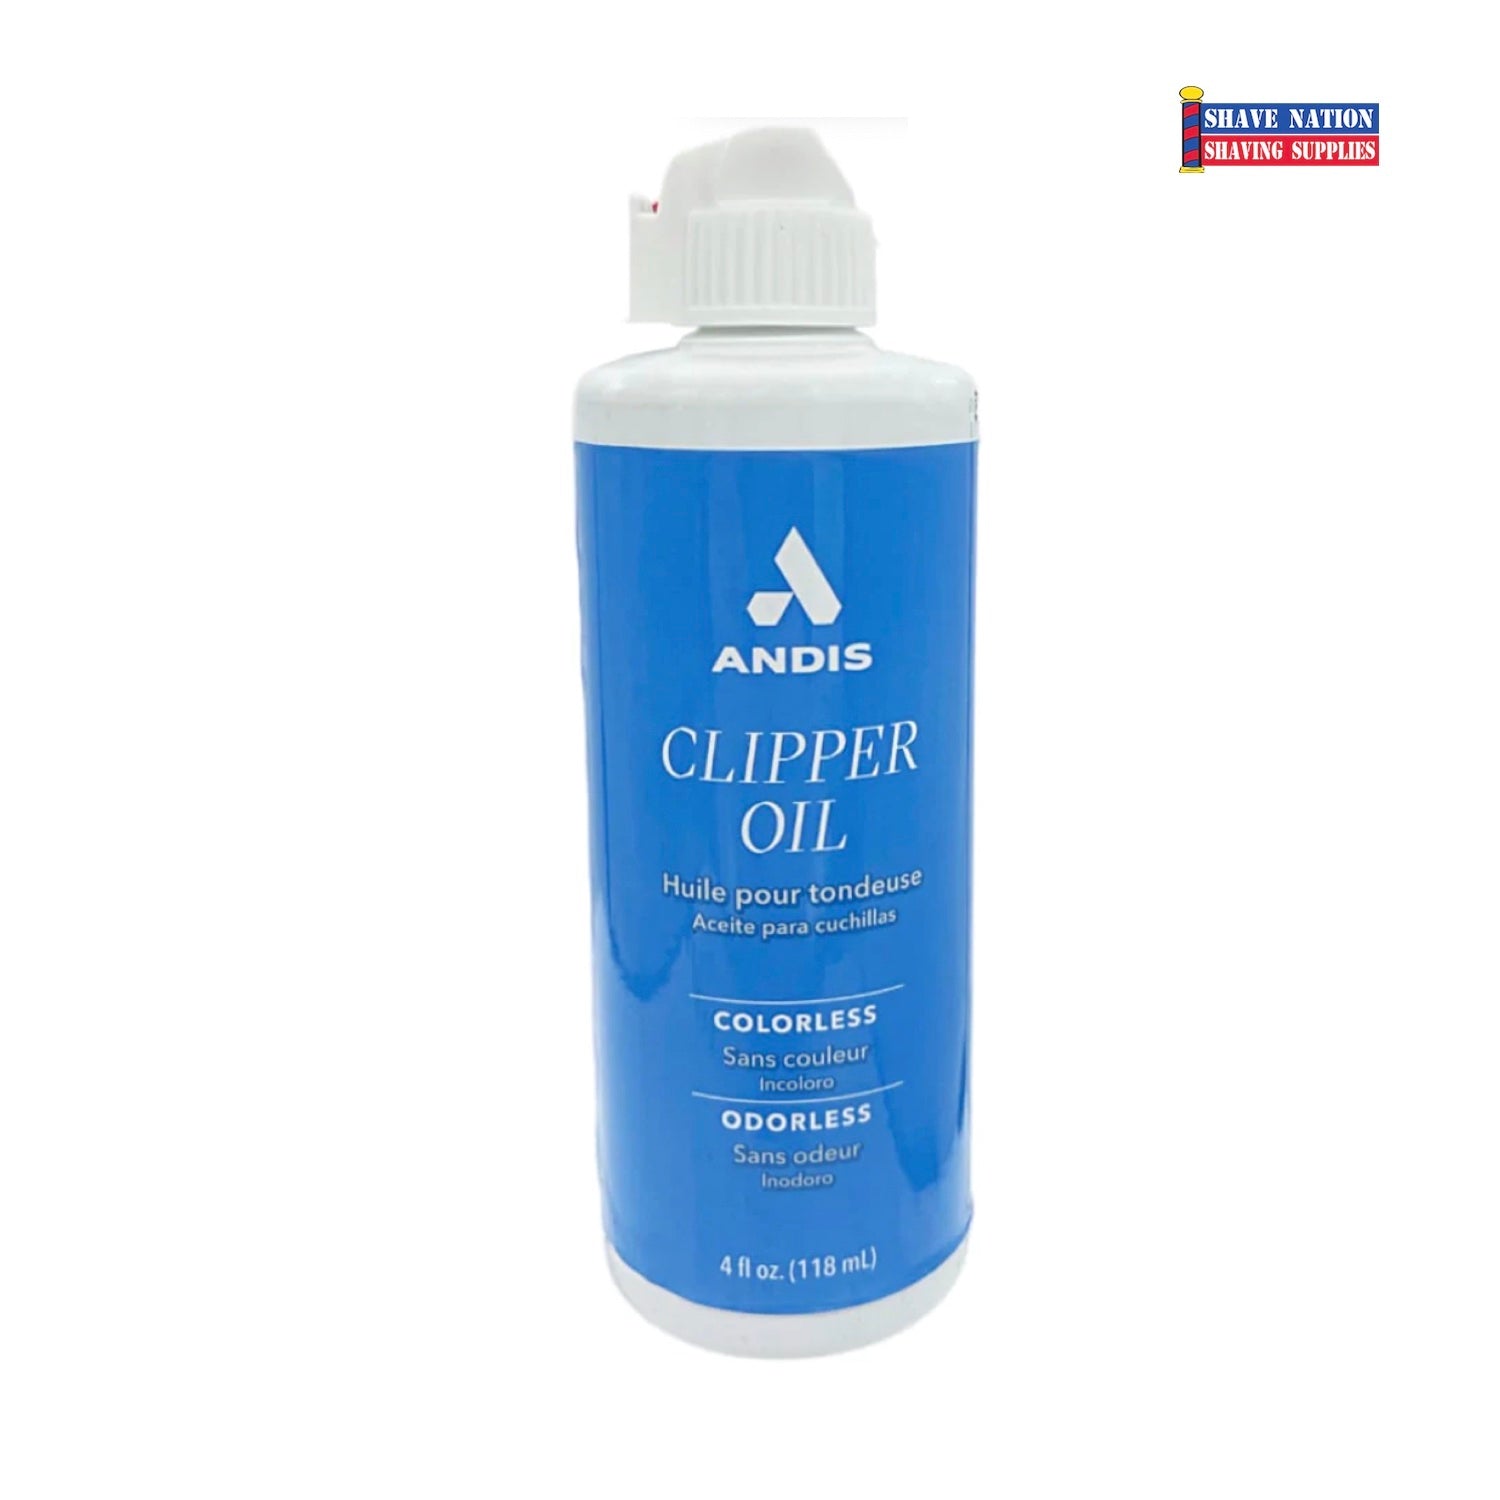 WAHL Professional Hair Clipper Blade Oil 4 Oz. Bottle 